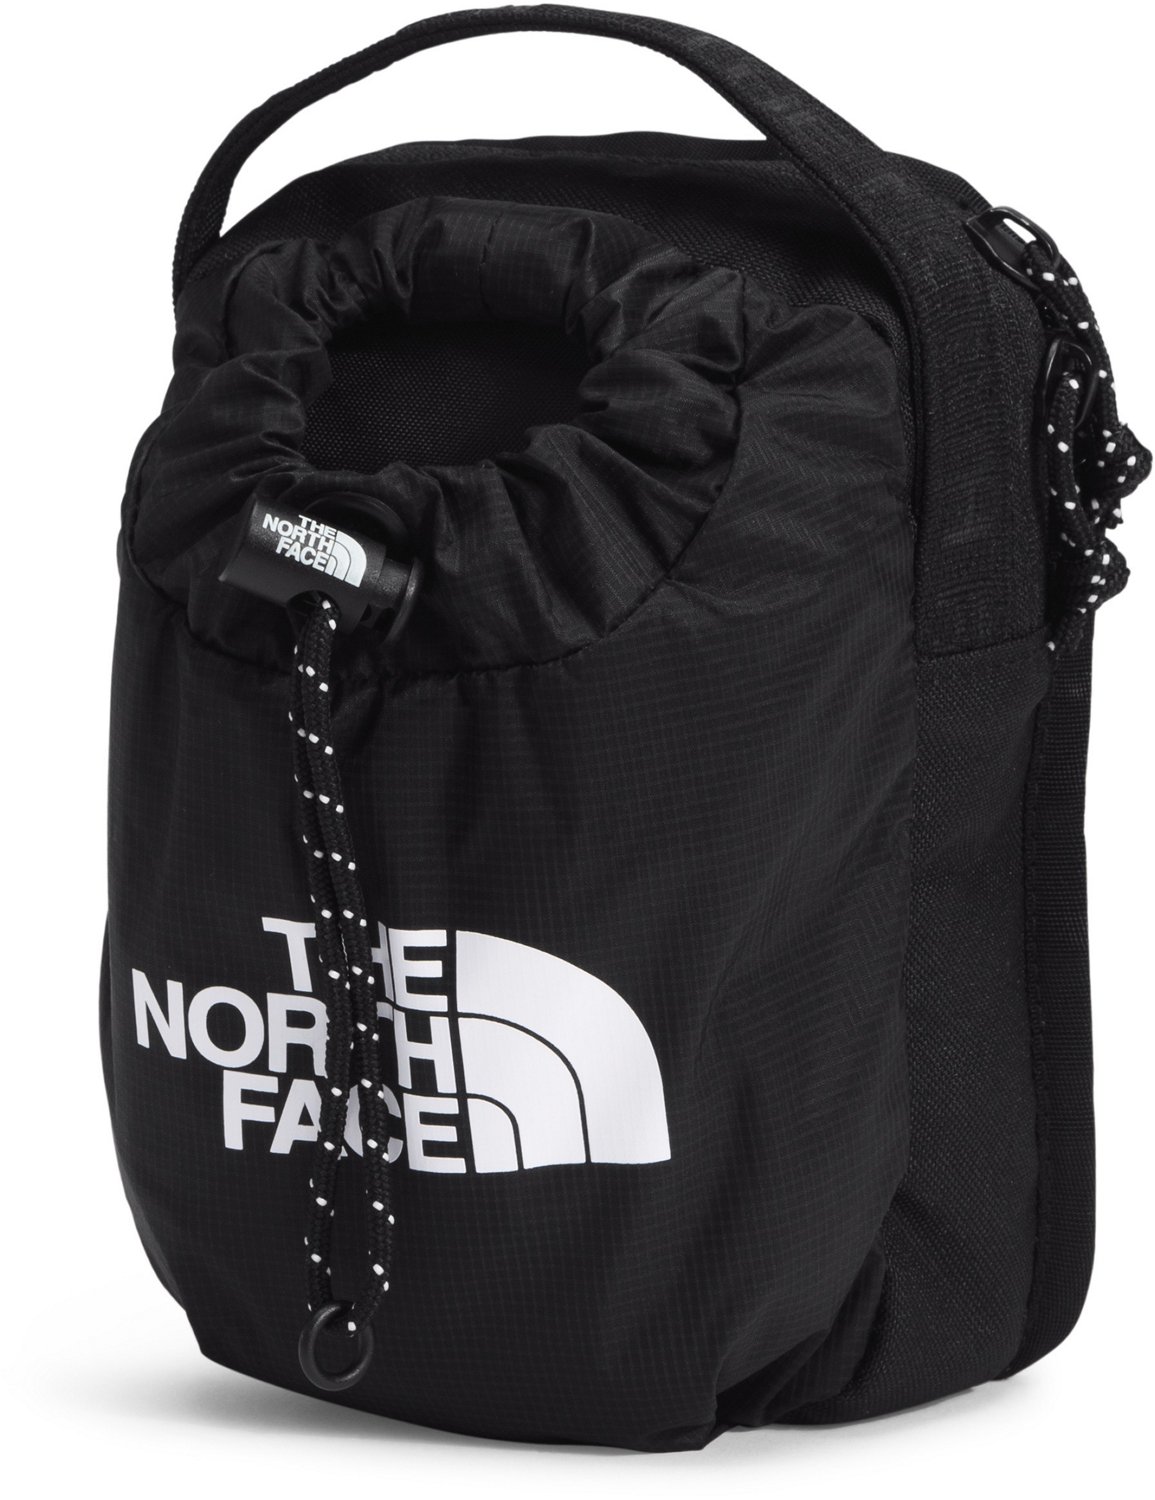 The North Face Bozer Cross Body Bag | Academy